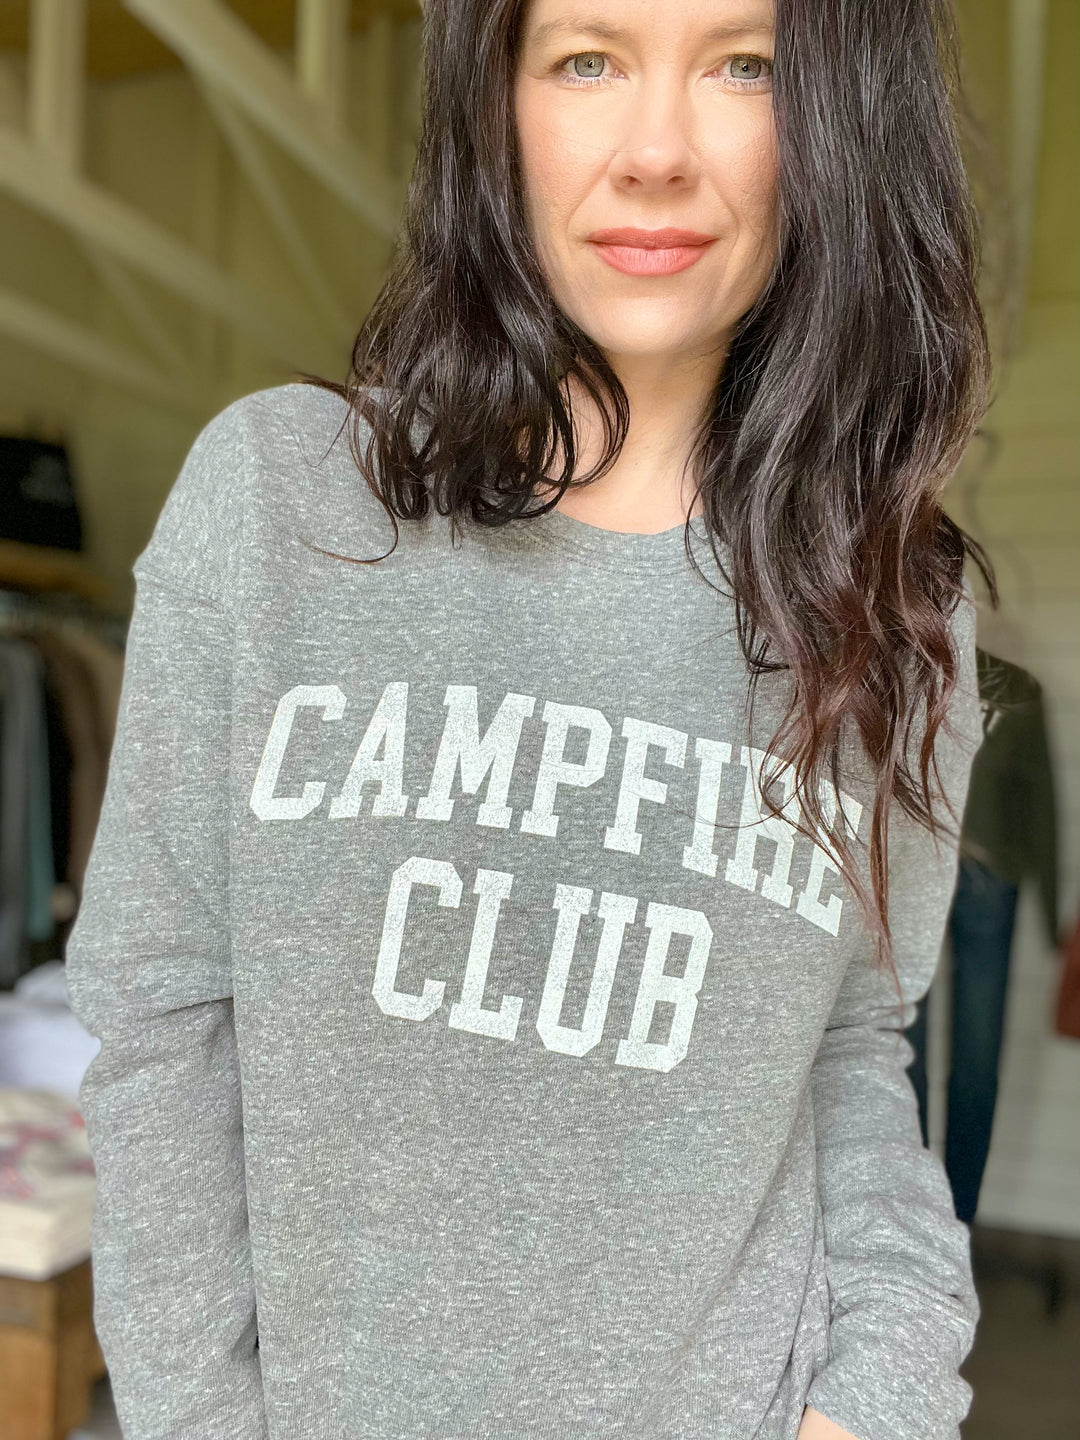 Dark Grey Campfire Club Sweatshirt